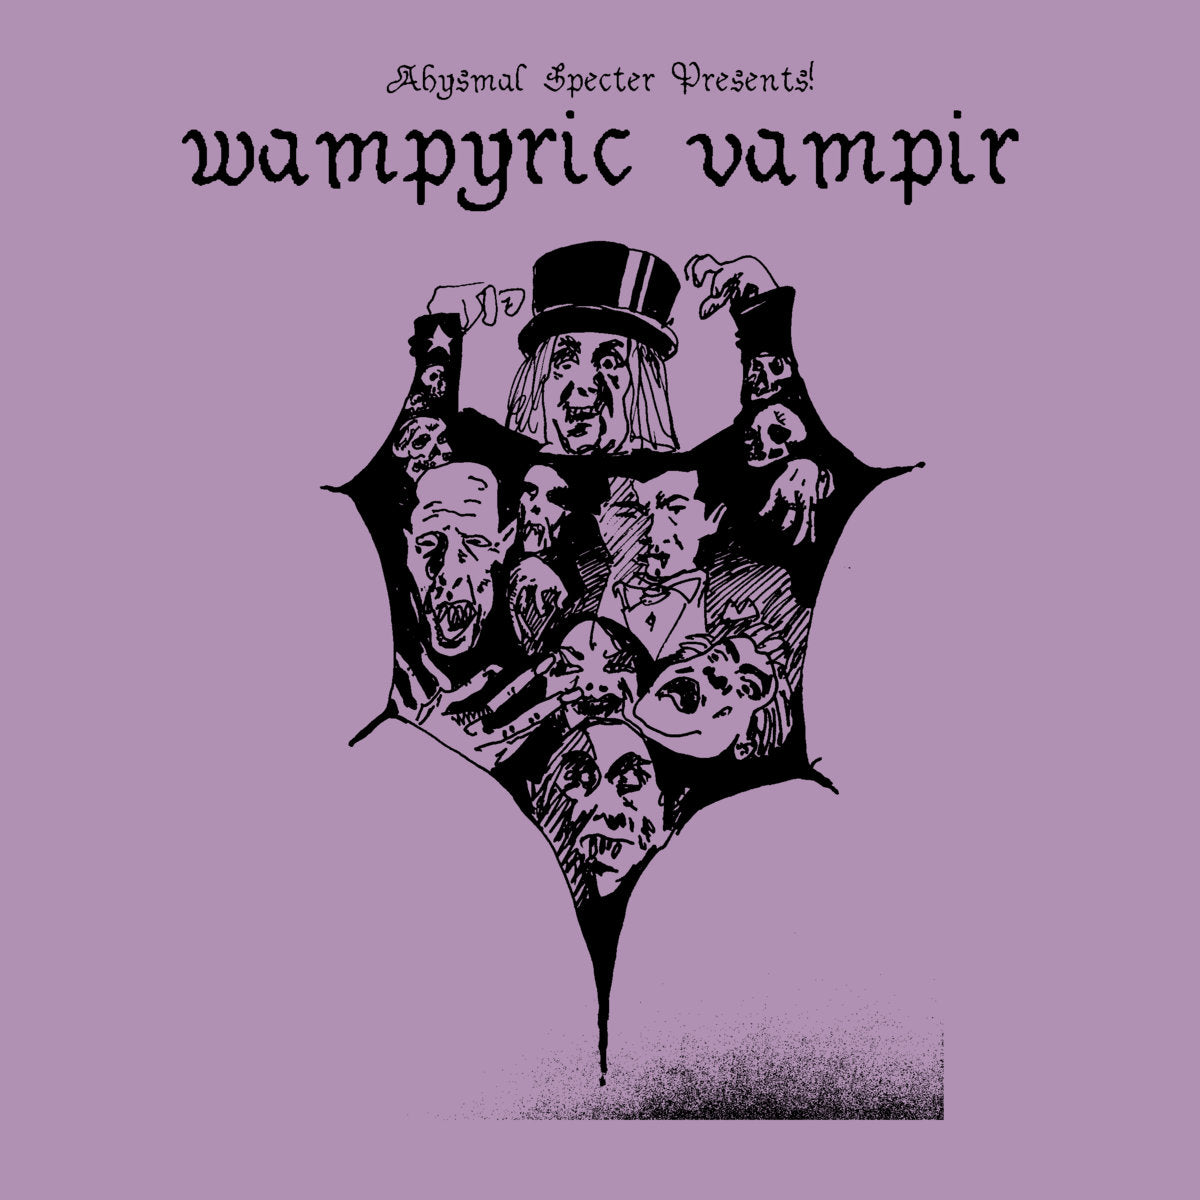 [SOLD OUT] WAMPYRIC VAMPIR "Abysmal Specter Presents..." CD